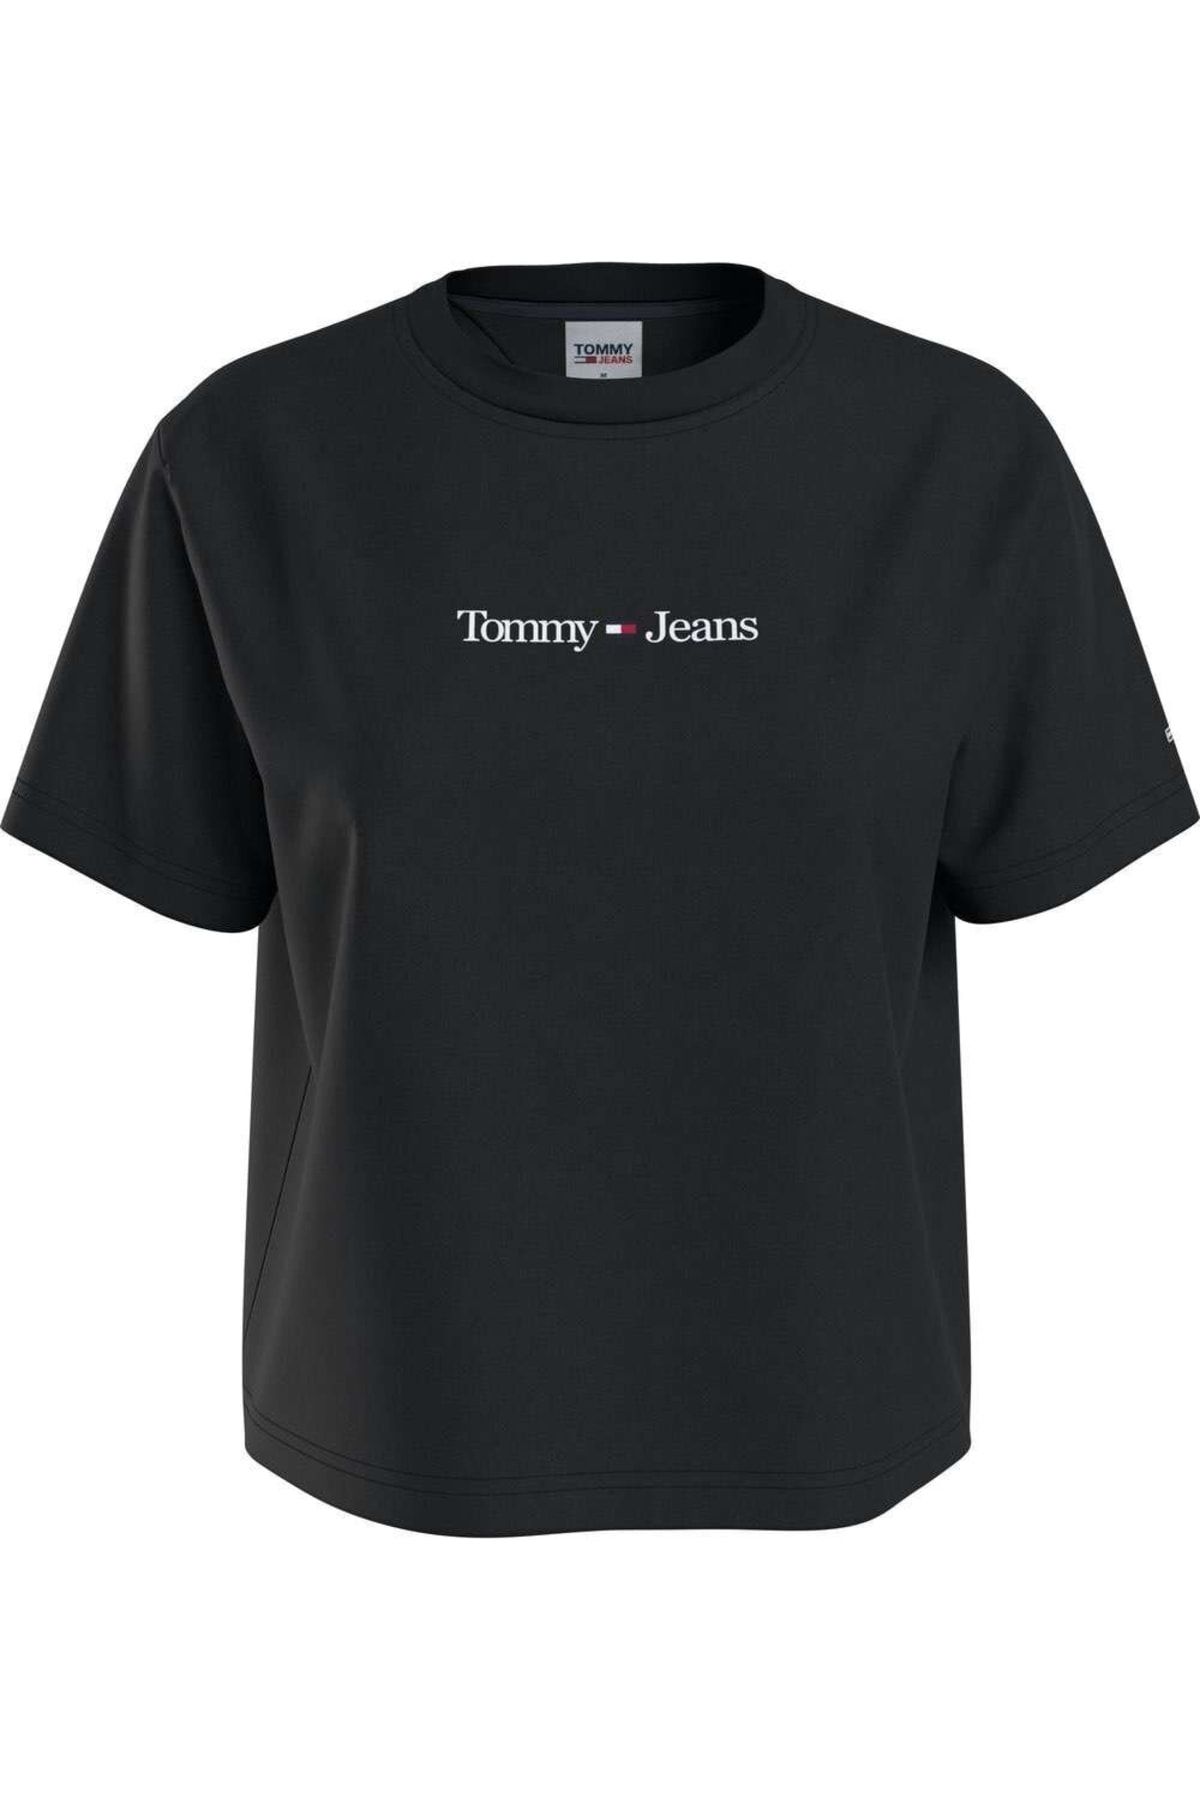 Linear Tommy - Serif T-Shirt Damen Hilfiger Trendyol Cls Tommy Jeans